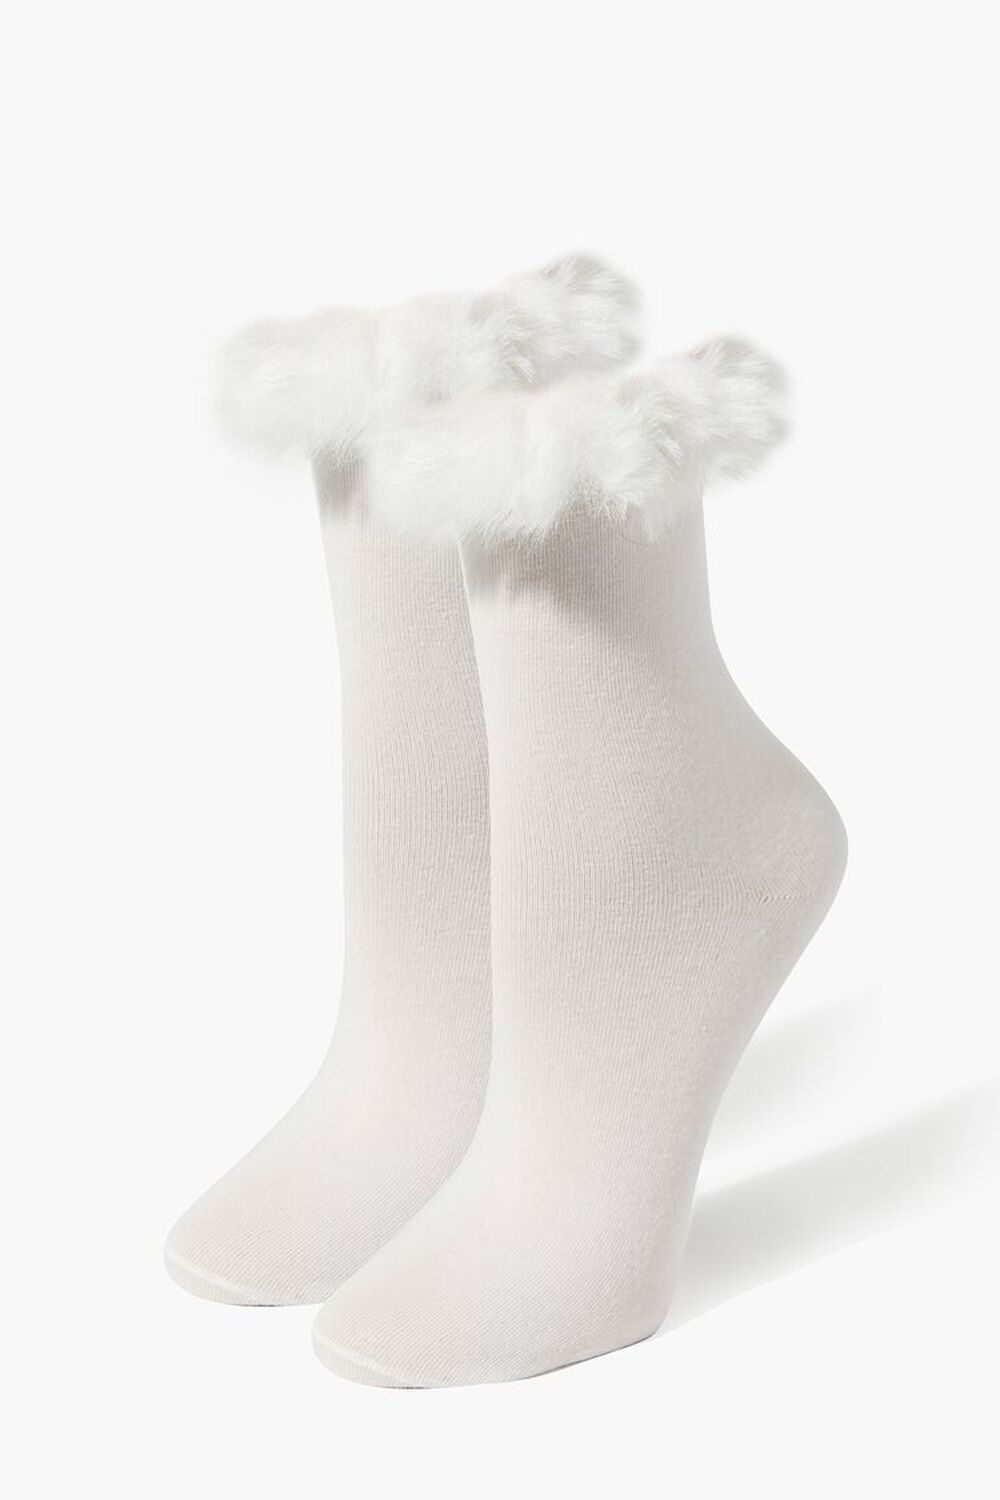 WHITE Faux Fur-Trim Crew Socks, image 1